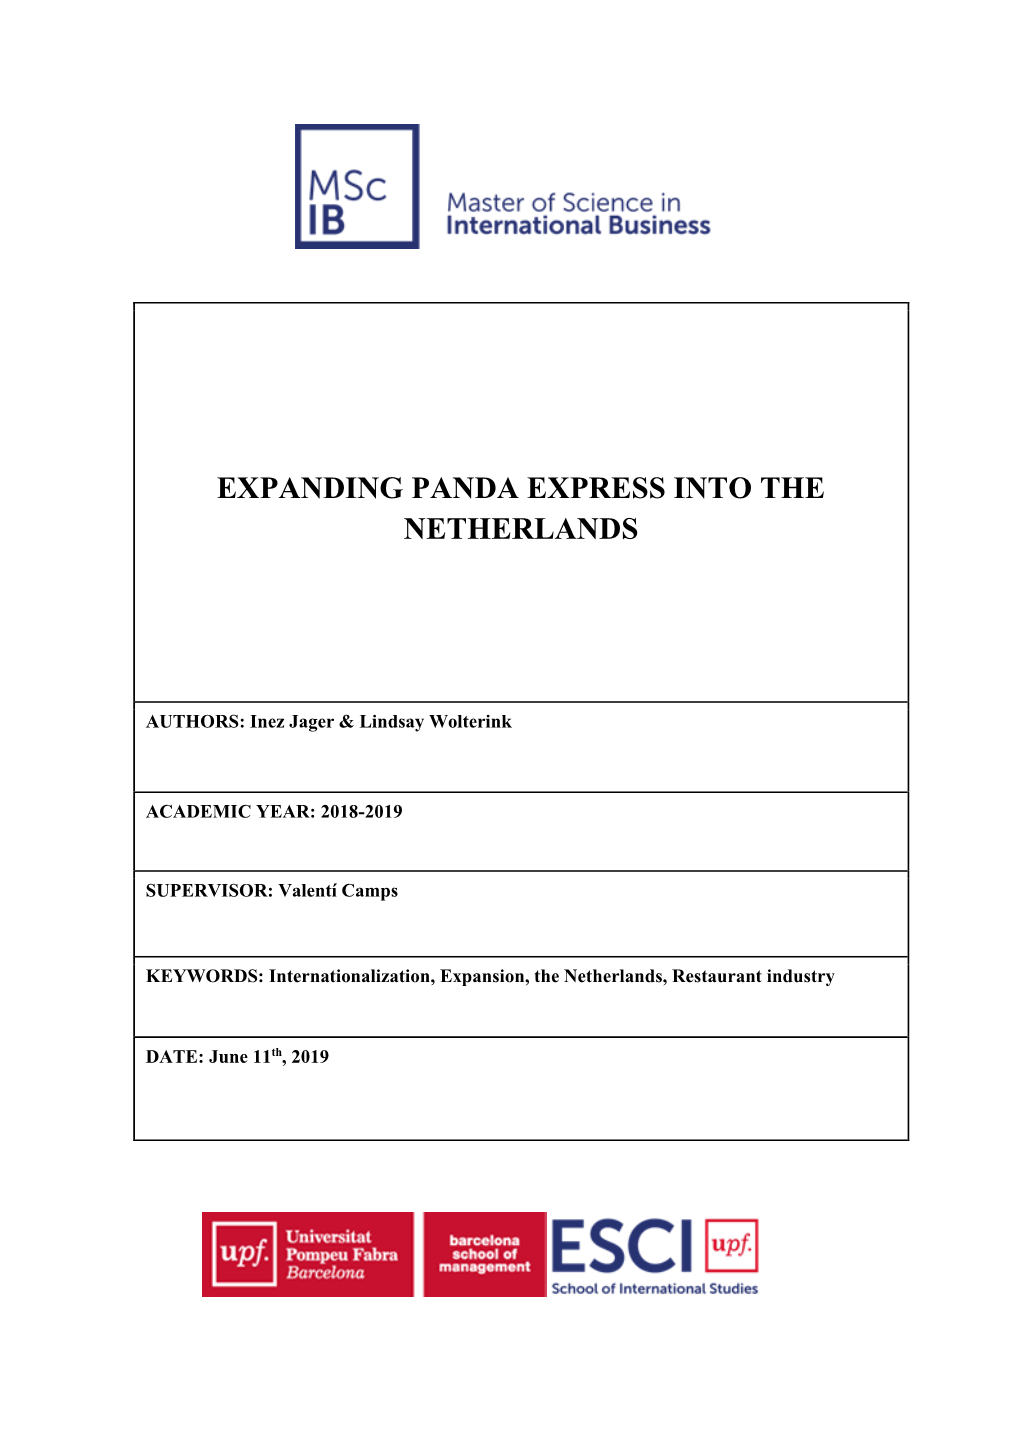 Expanding Panda Express Into the Netherlands